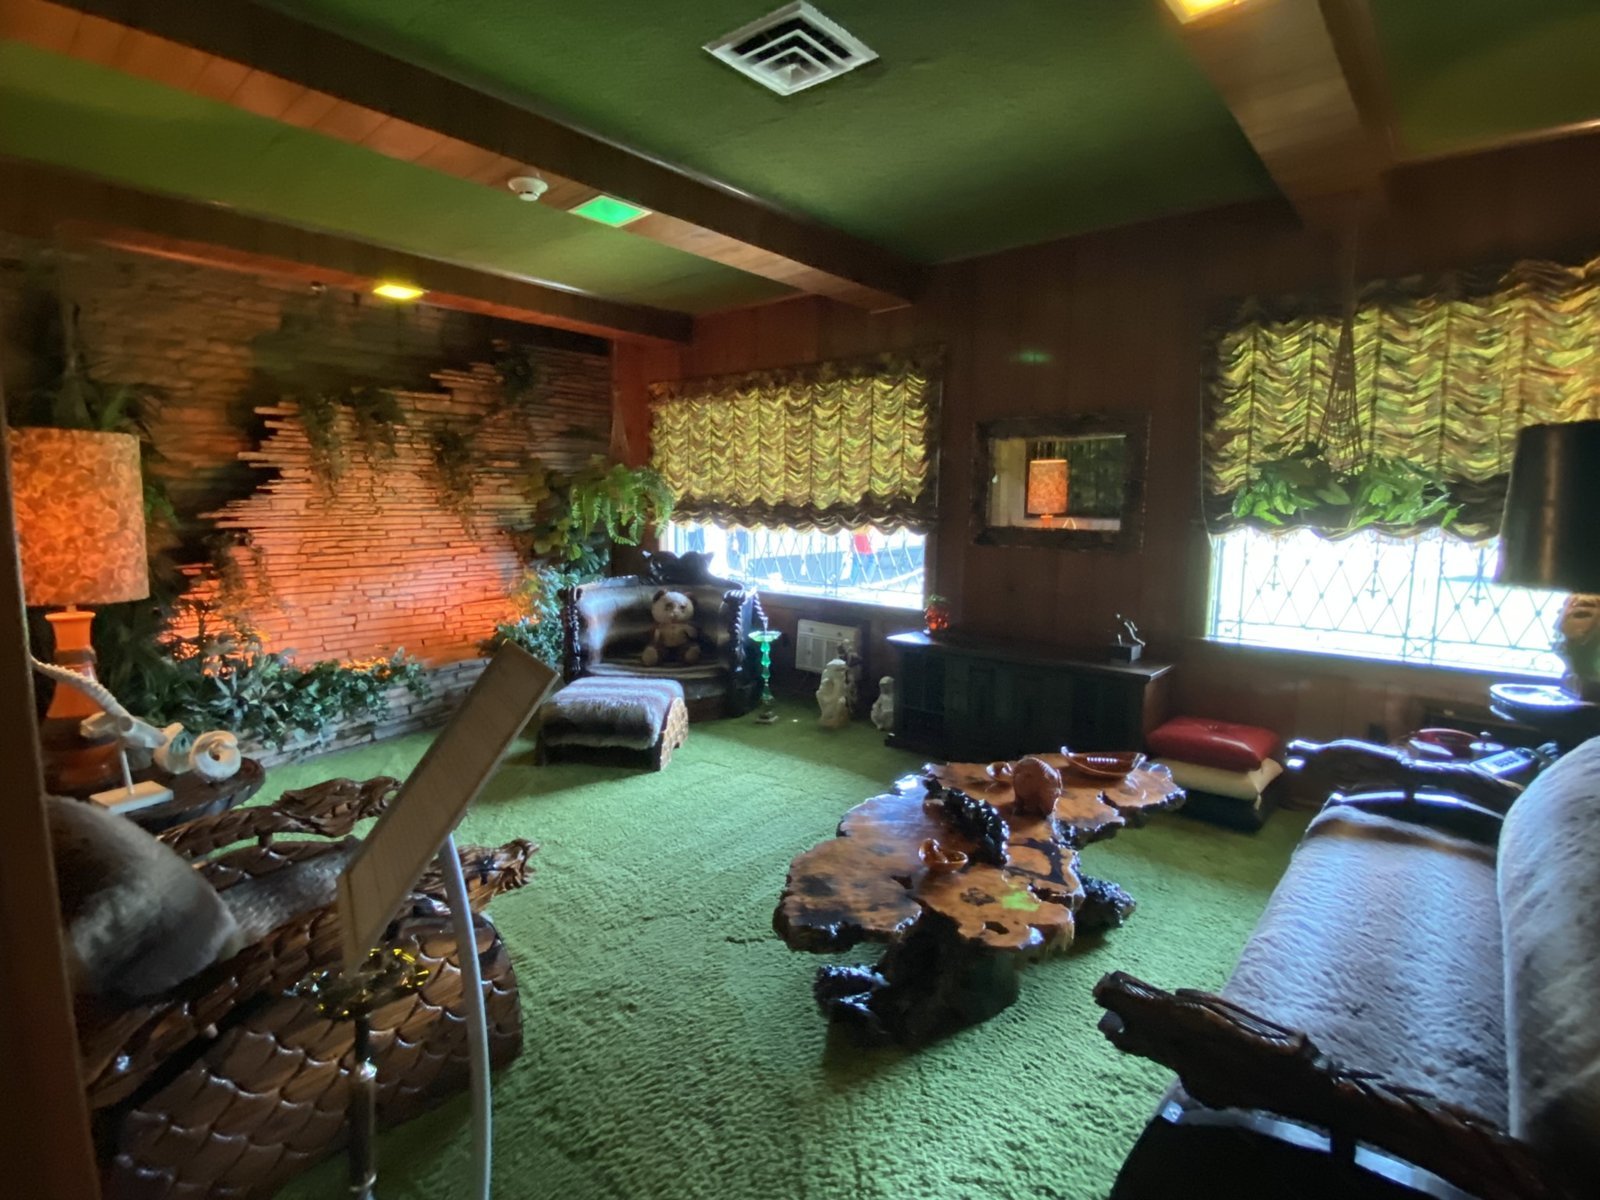 Der Jungle Room, wohl der berühmteste Raum auf Graceland